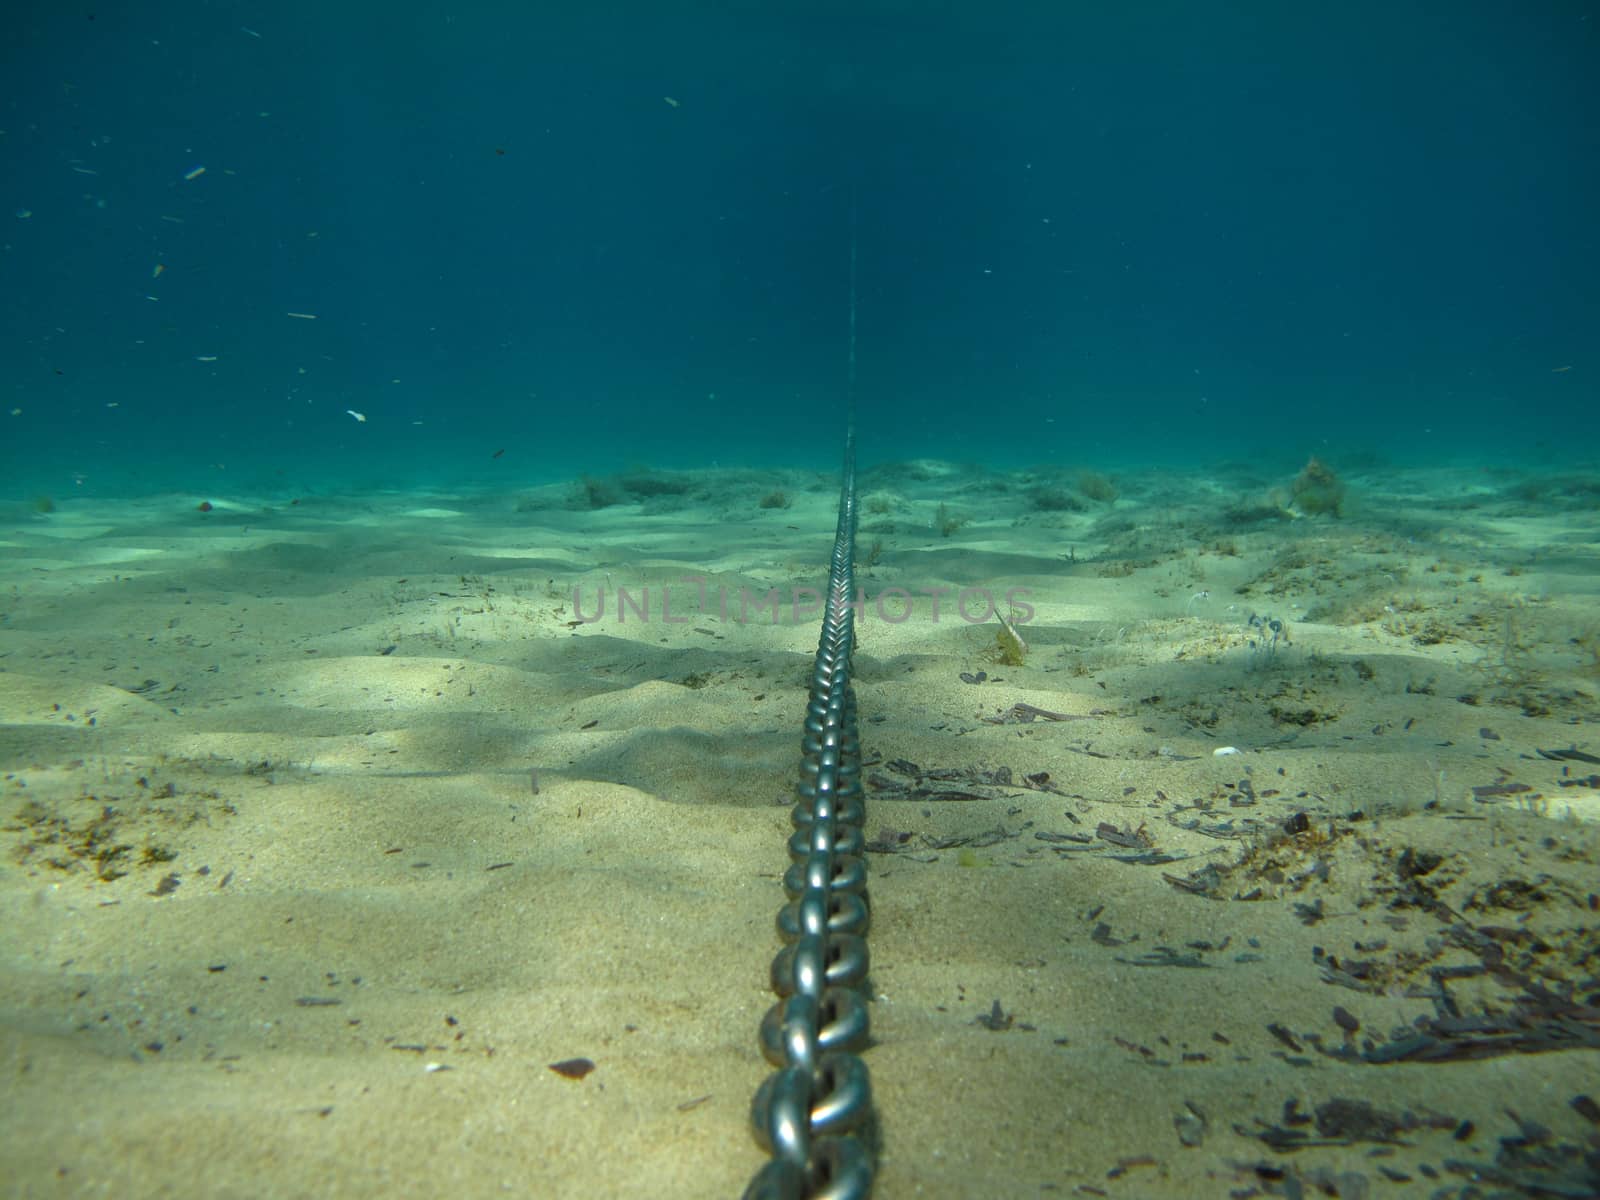 Anchor Chain Underwater v1 by merge